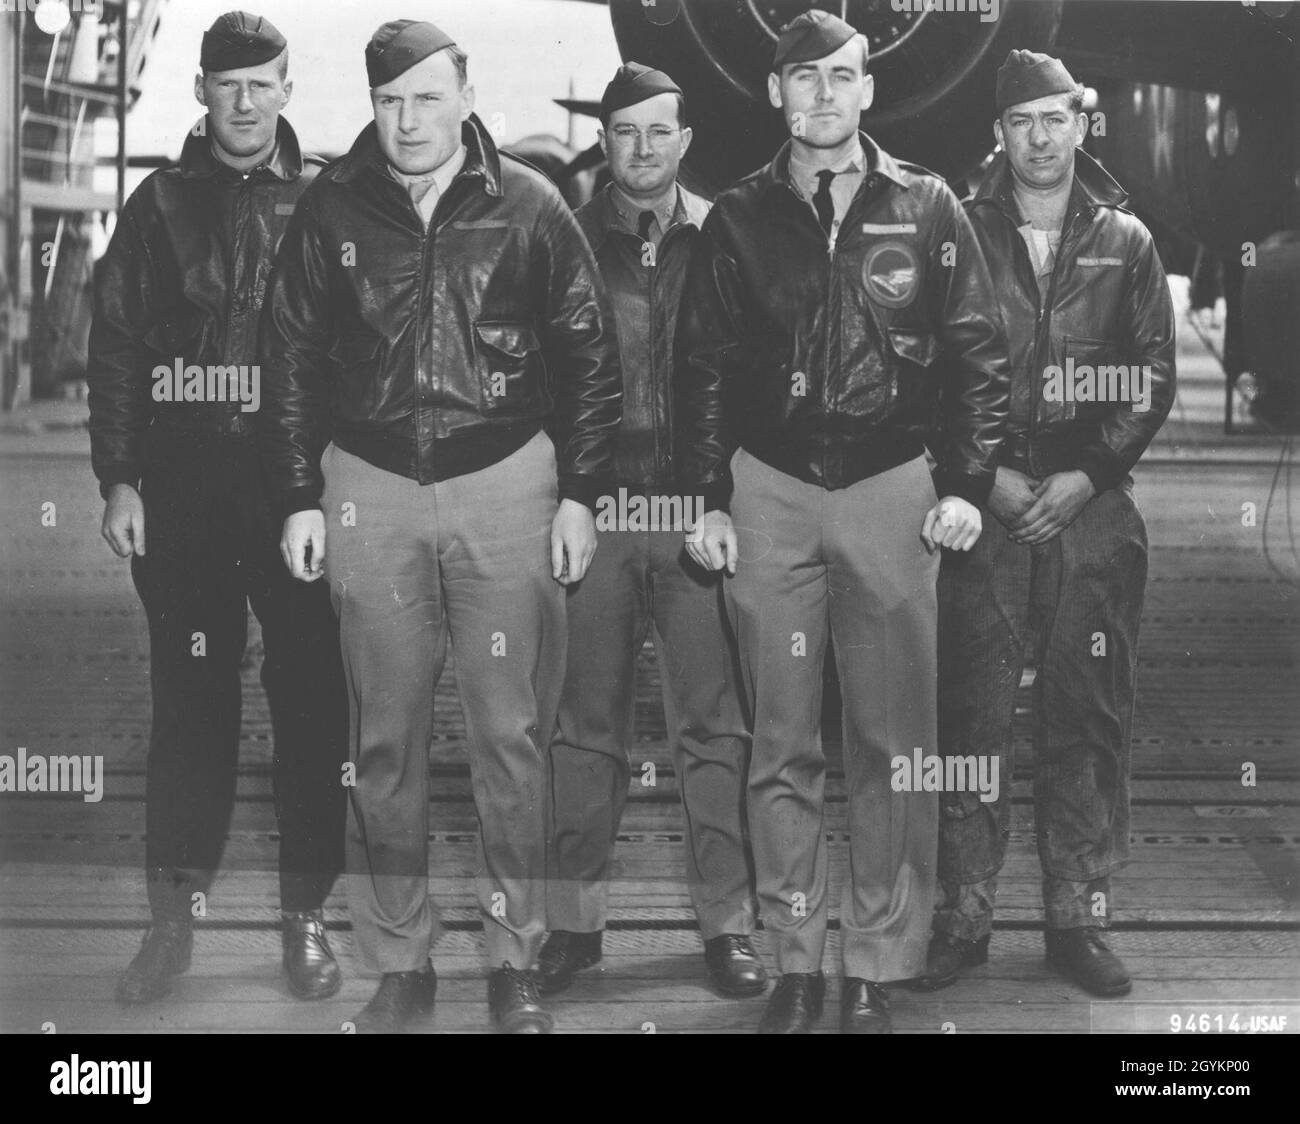 Crew No. 15 (Plane #40-2267, target Nagoya): 89th Reconnaissance Squadron, Lt. Donald G. Smith, pilot; Lt. Griffith P. Williams, copilot; Lt. Howard A. Sessler, navigator/bombardier; Lt. Thomas R. White, flight engineer; Sgt. Edward J. Saylor, gunner. (U.S. Air Force photo) Stock Photo